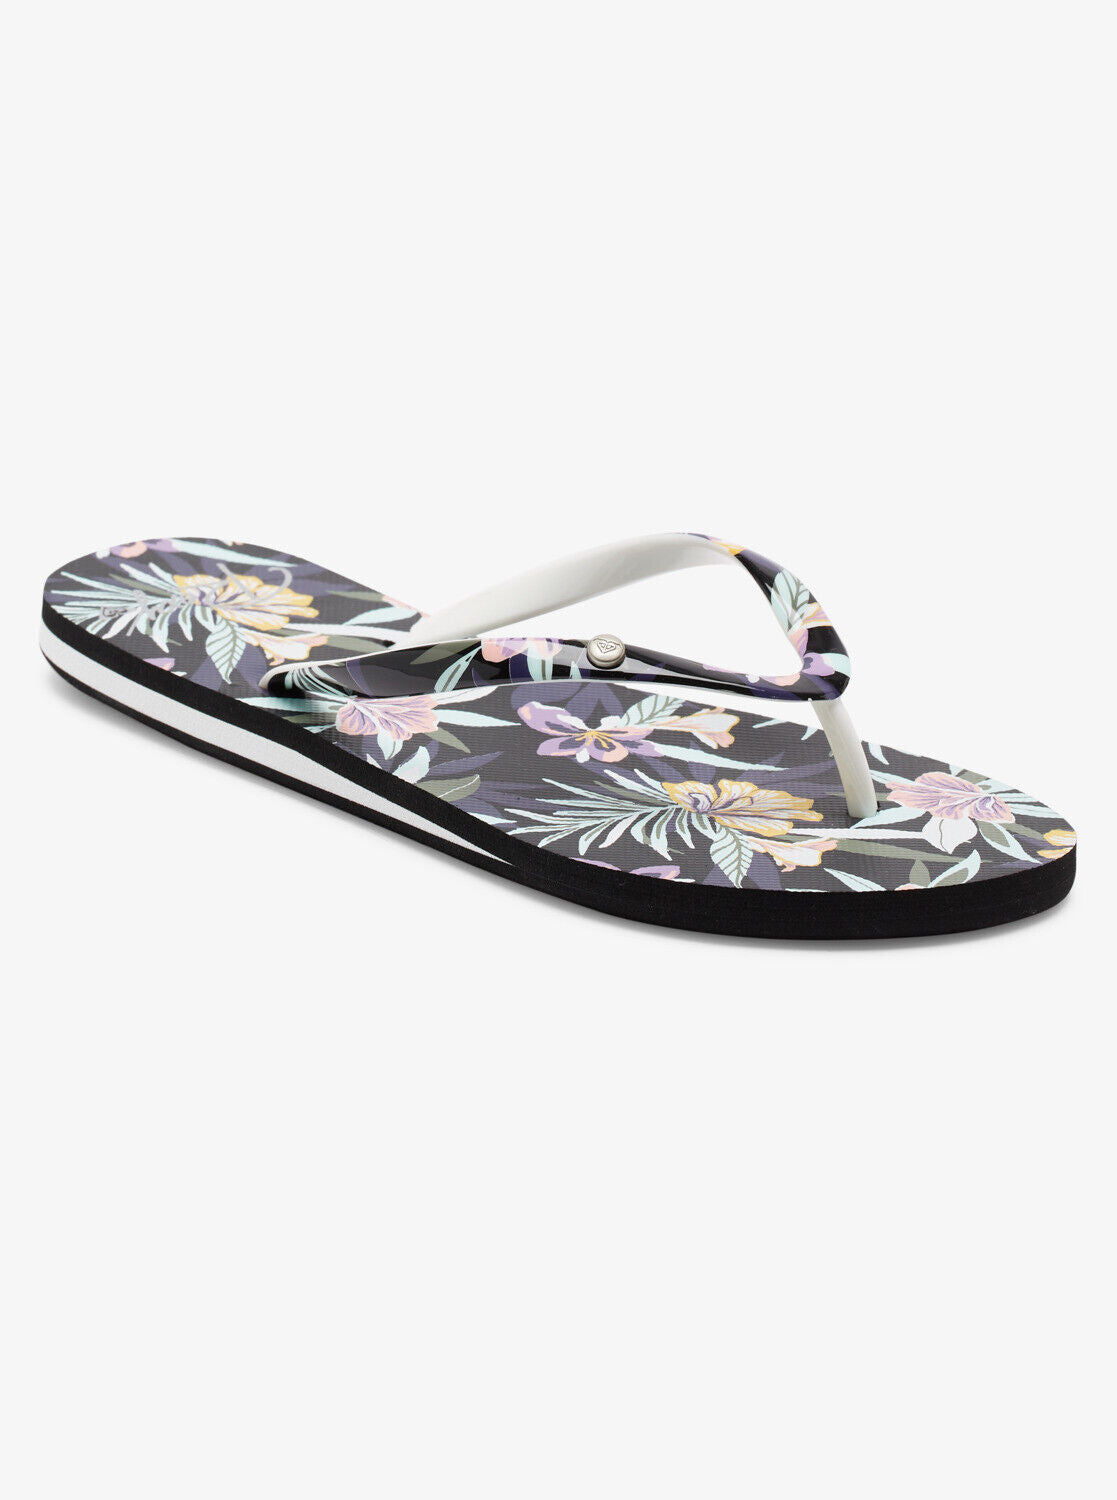 Roxy Ladies Portofino Black Floral Flip Flops Thong Sandals